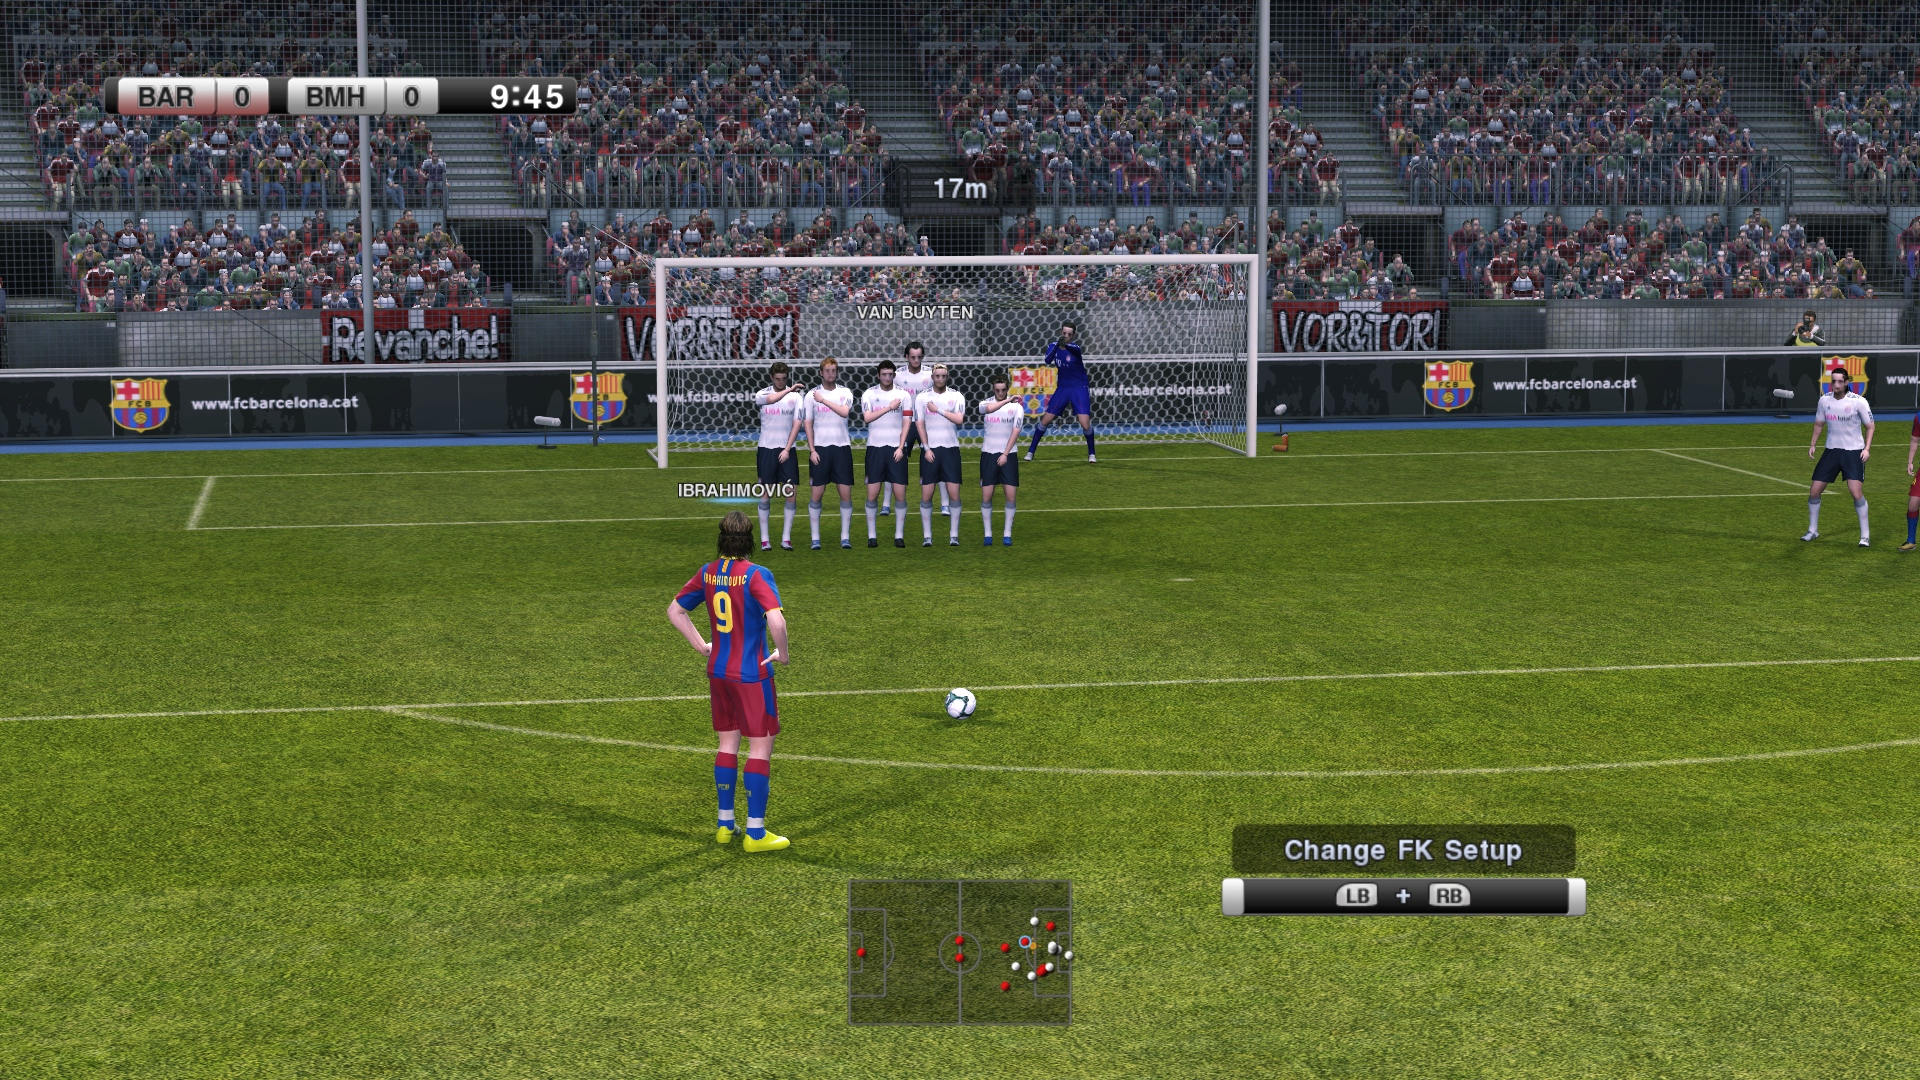 PES Pro Evolution Soccer 2011 Free Download - IPC Games